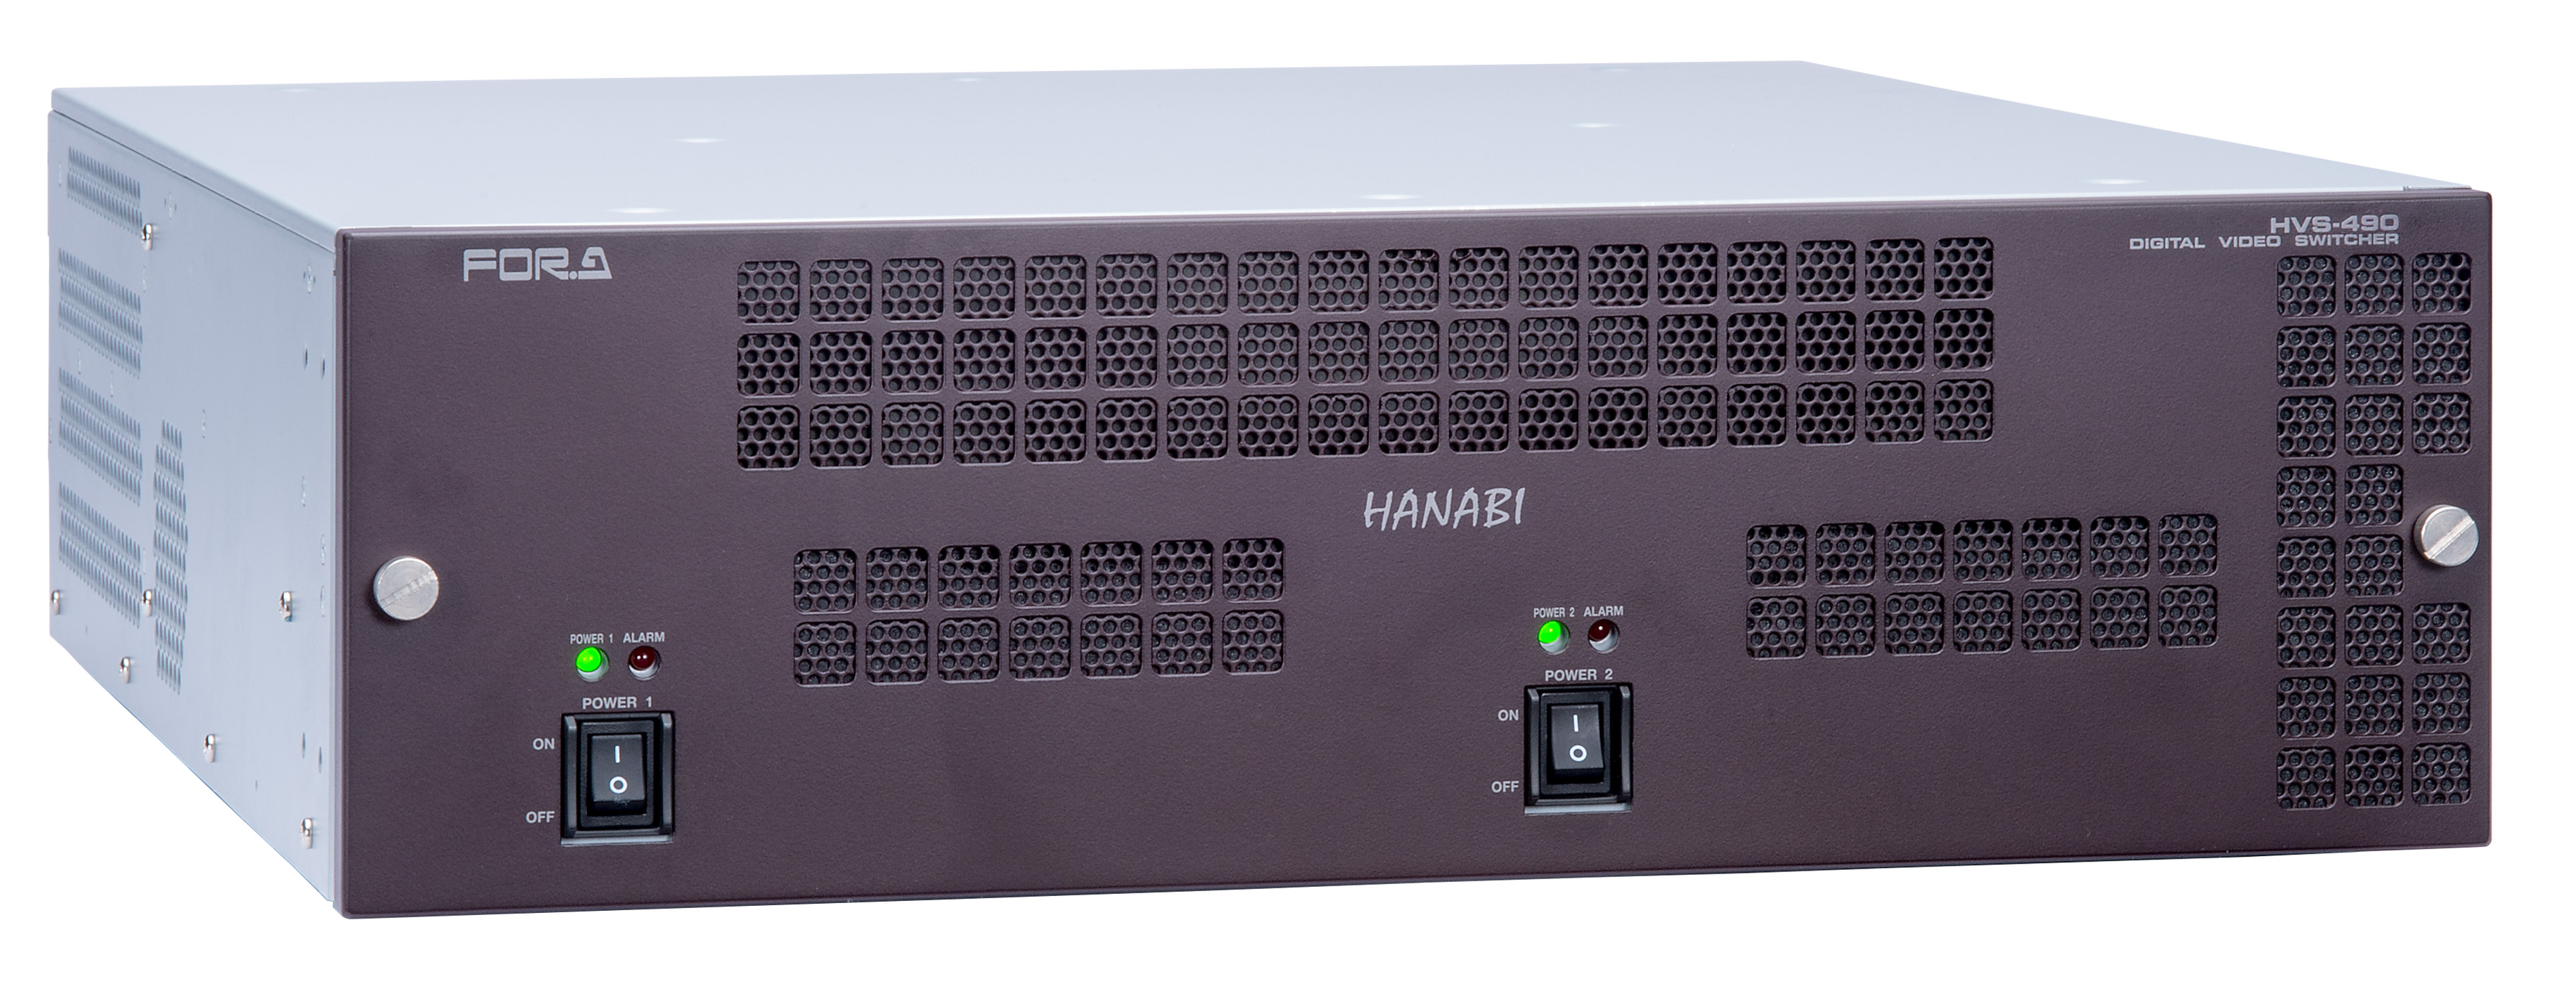 For.A HVS-490 2 M/E, 16-input, 9-output video switcher